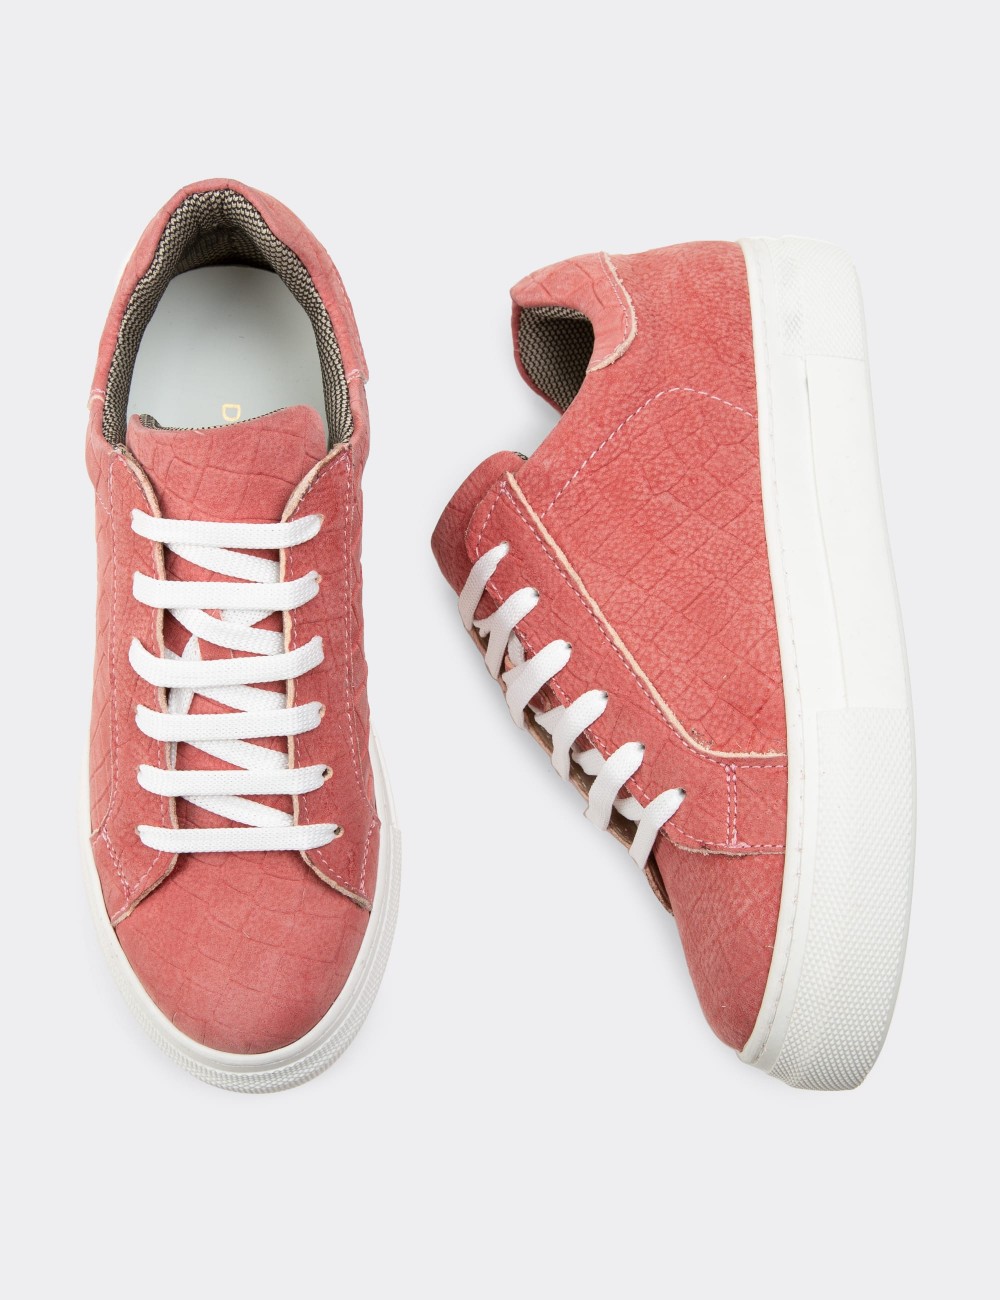 Pink Nubuck Leather Sneakers - Z1681ZPMBC01